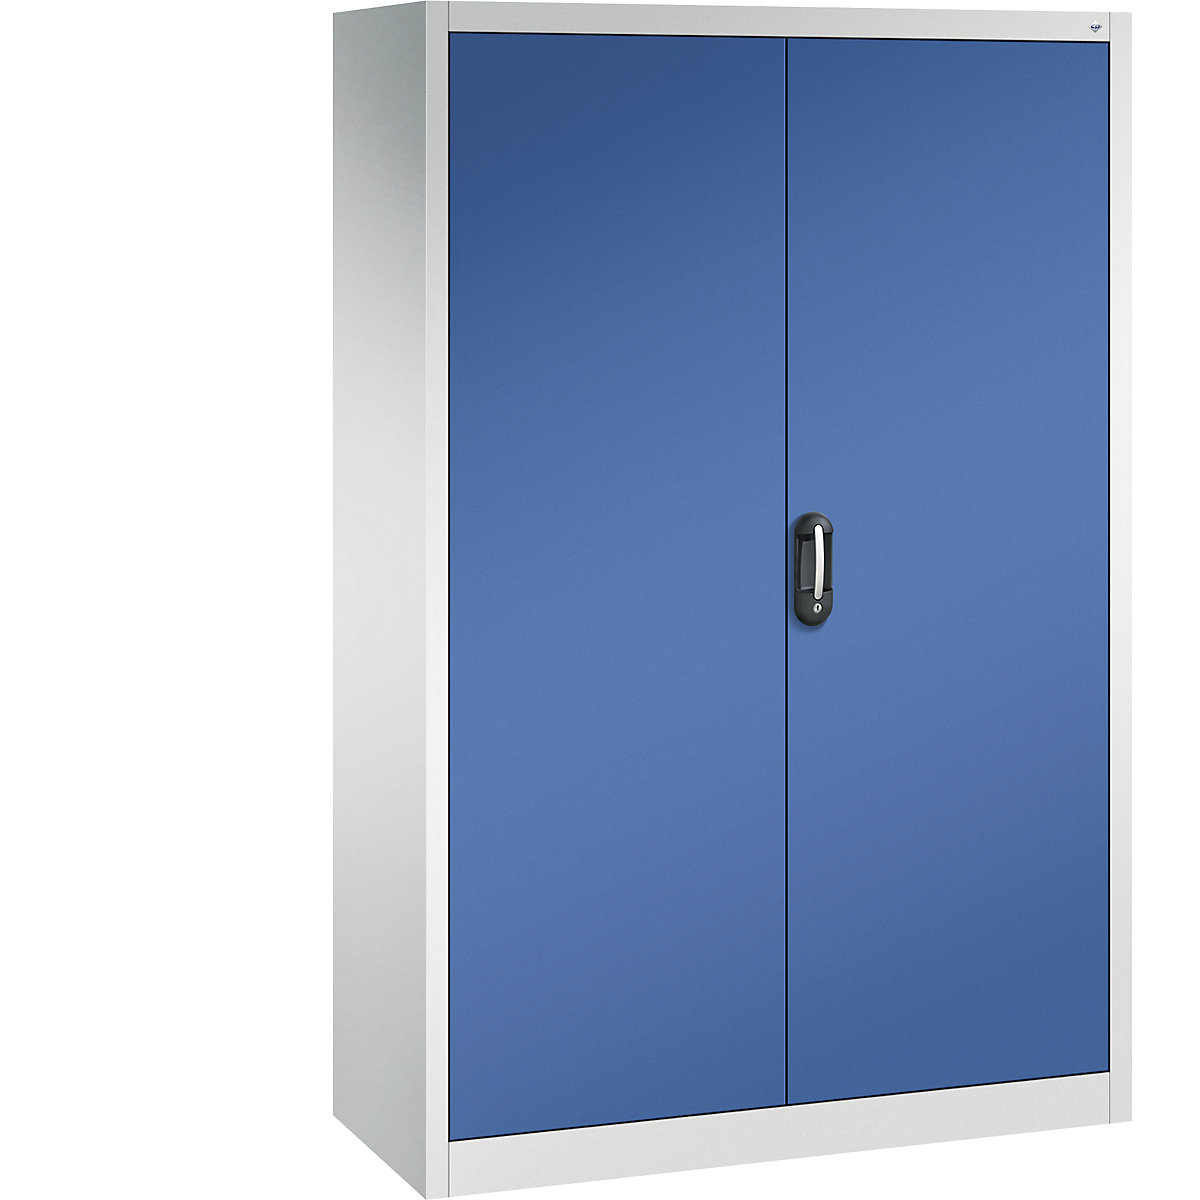 ACURADO universal cupboard – C+P, WxD 1200 x 500 mm, light grey / gentian blue-22